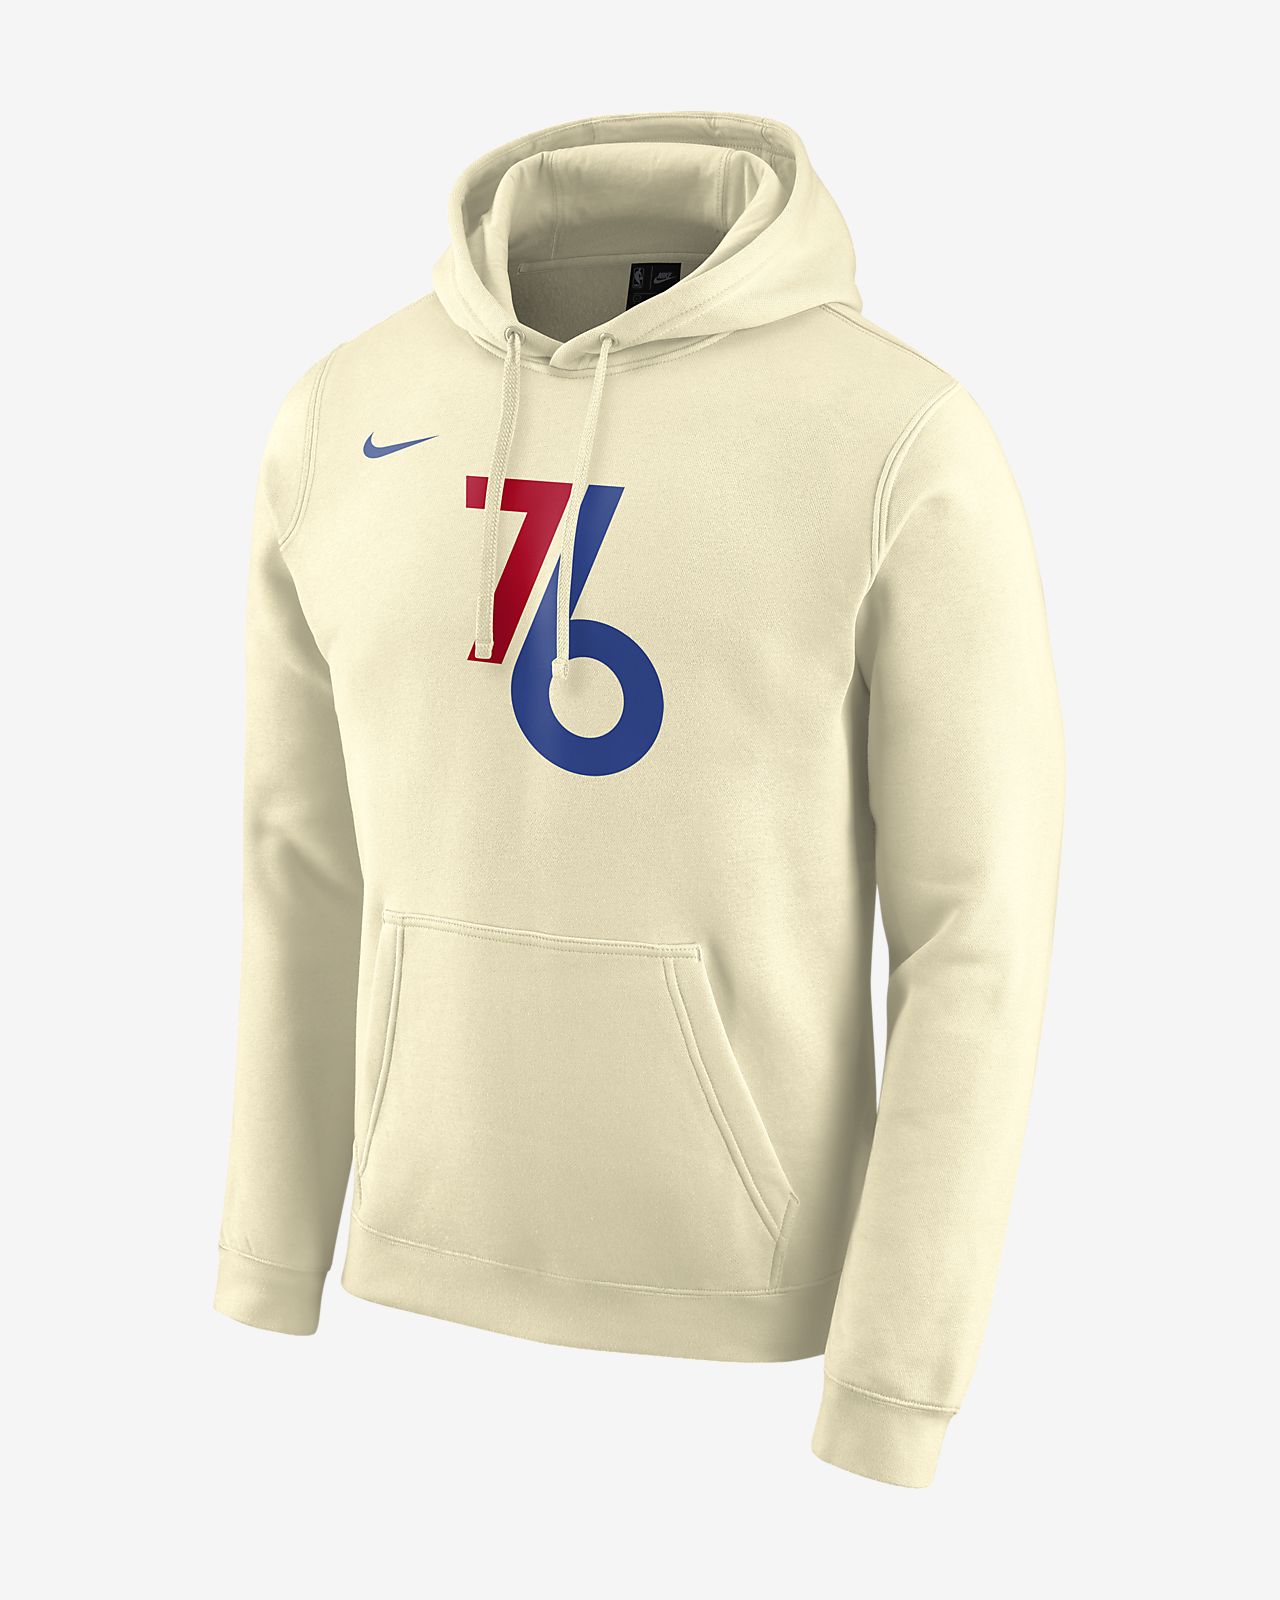 nike 76ers sweatshirt online -